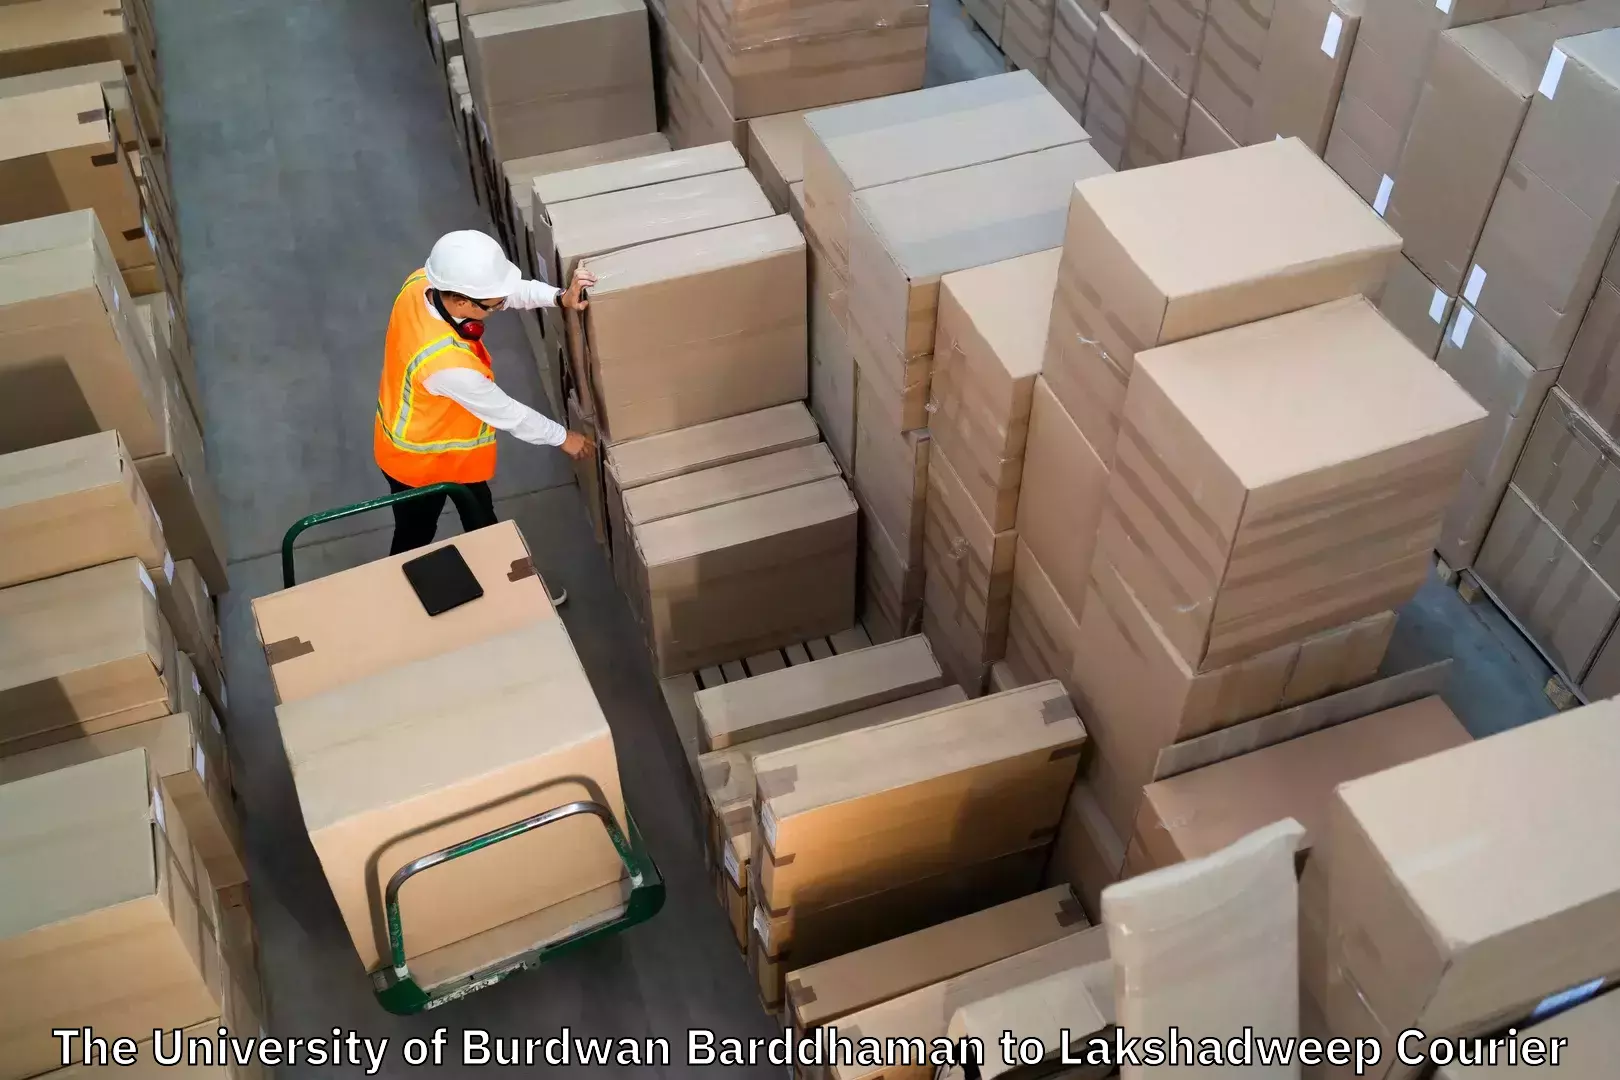 Doorstep luggage collection The University of Burdwan Barddhaman to Lakshadweep